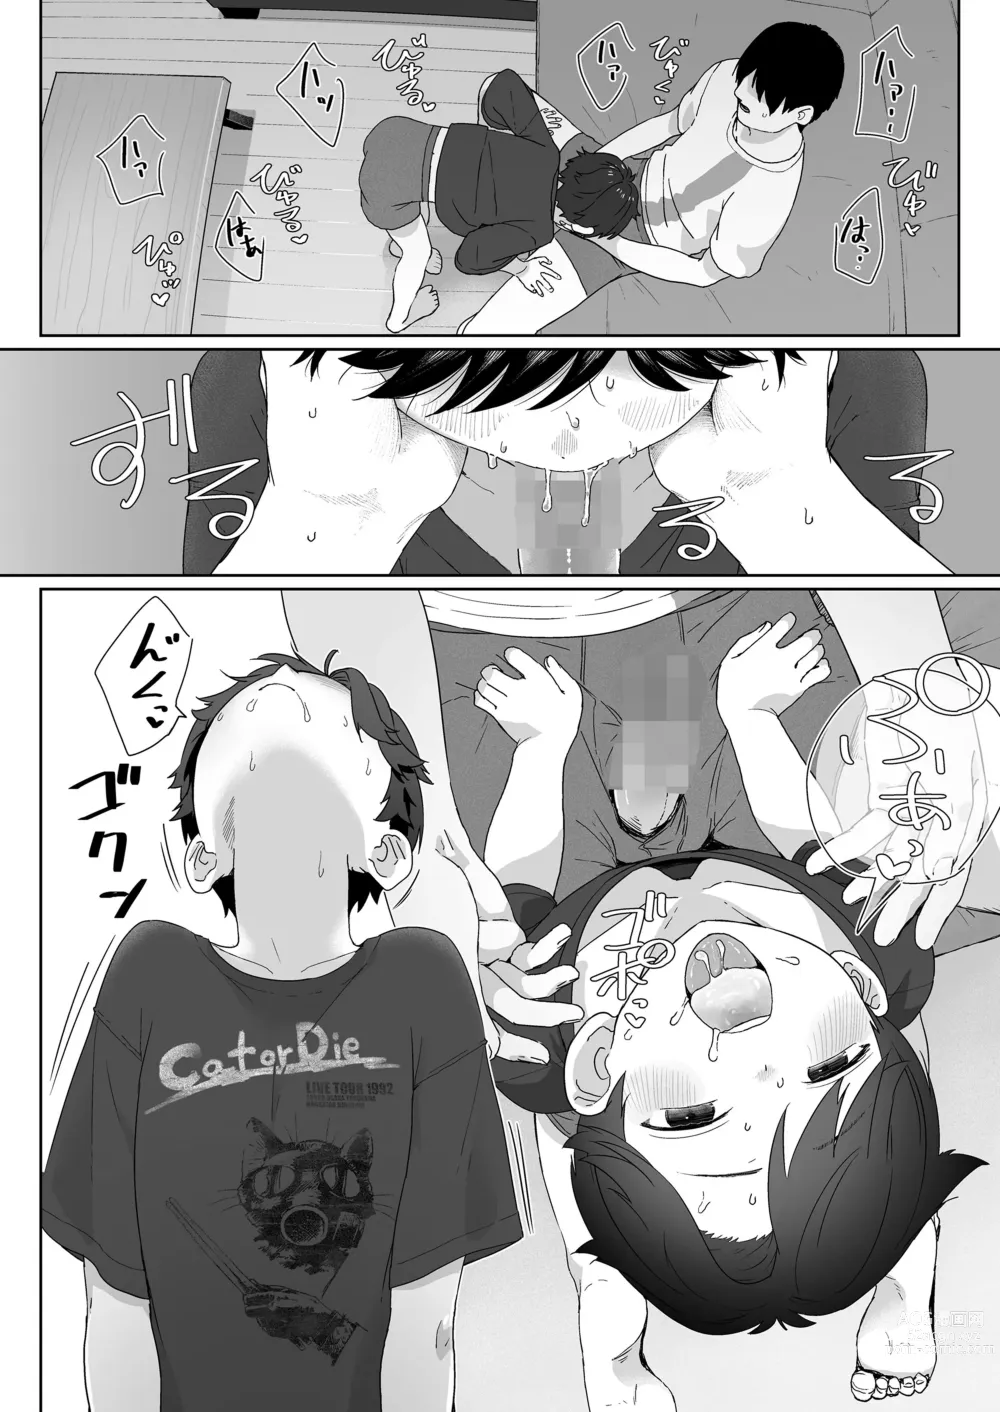 Page 16 of manga Ore ga Taberu kara